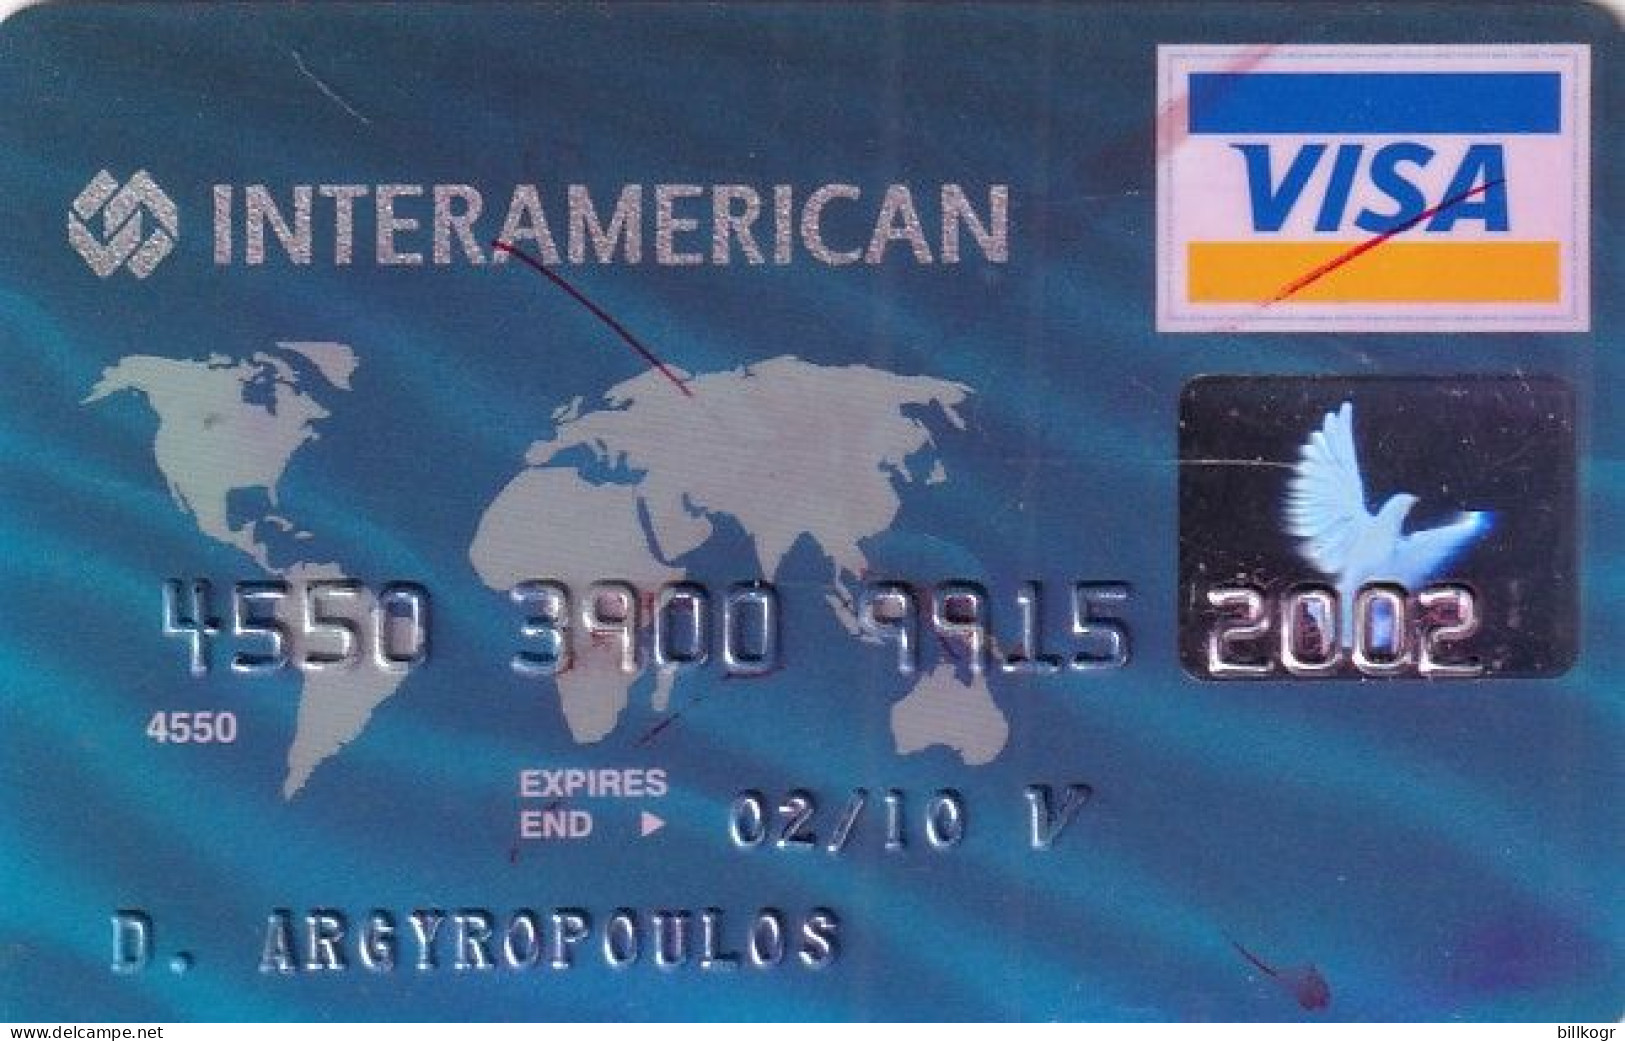 GREECE - Interamerican, EFG Eurobank Ergasias Visa, 05/04, Used - Credit Cards (Exp. Date Min. 10 Years)